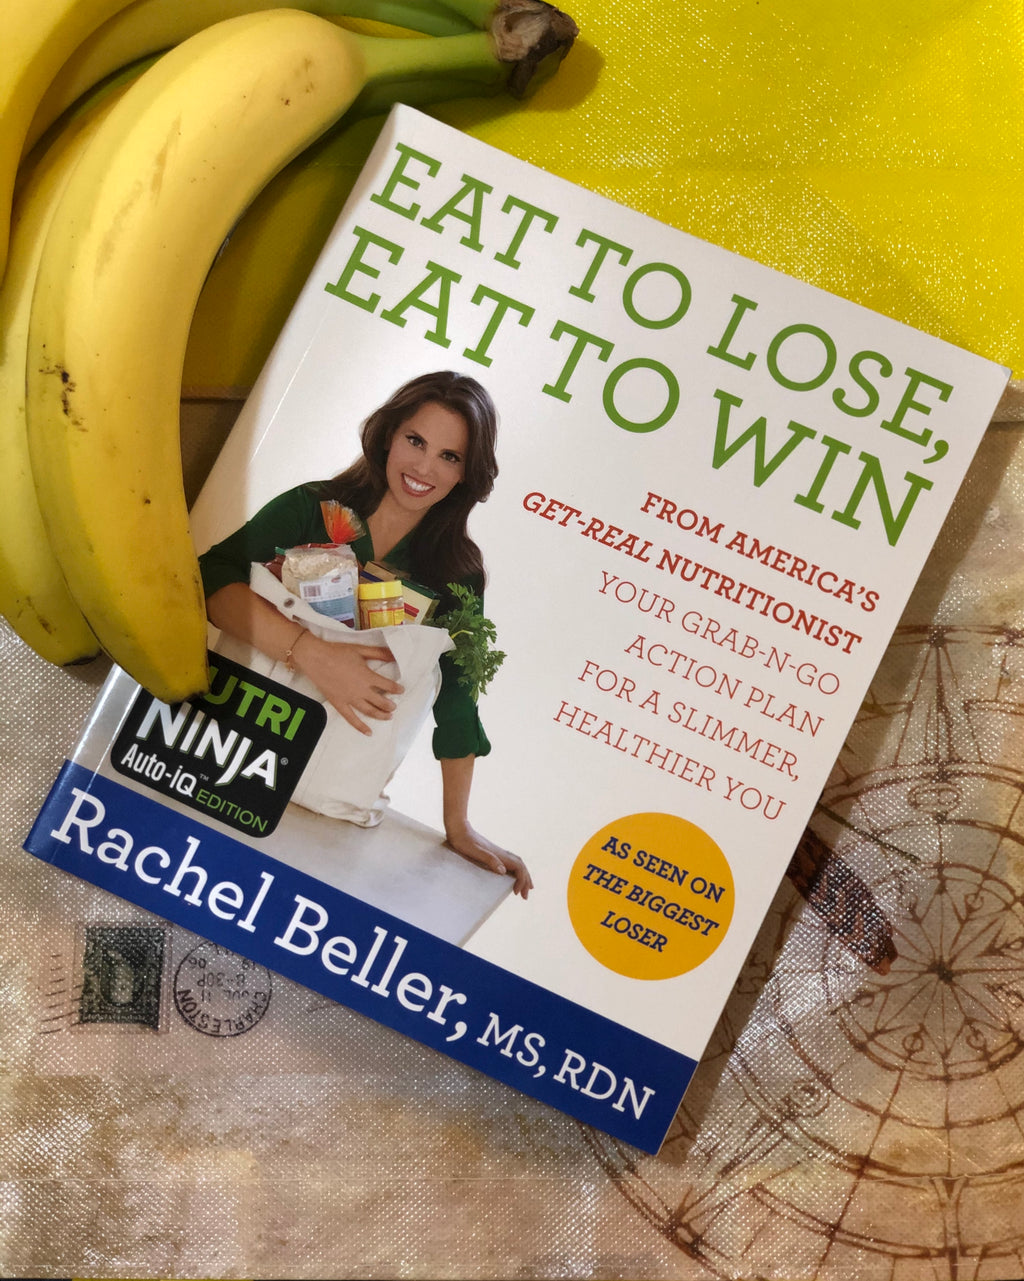 Eat to lose, Eat to Win- By Rachel Beller, MS,RDN